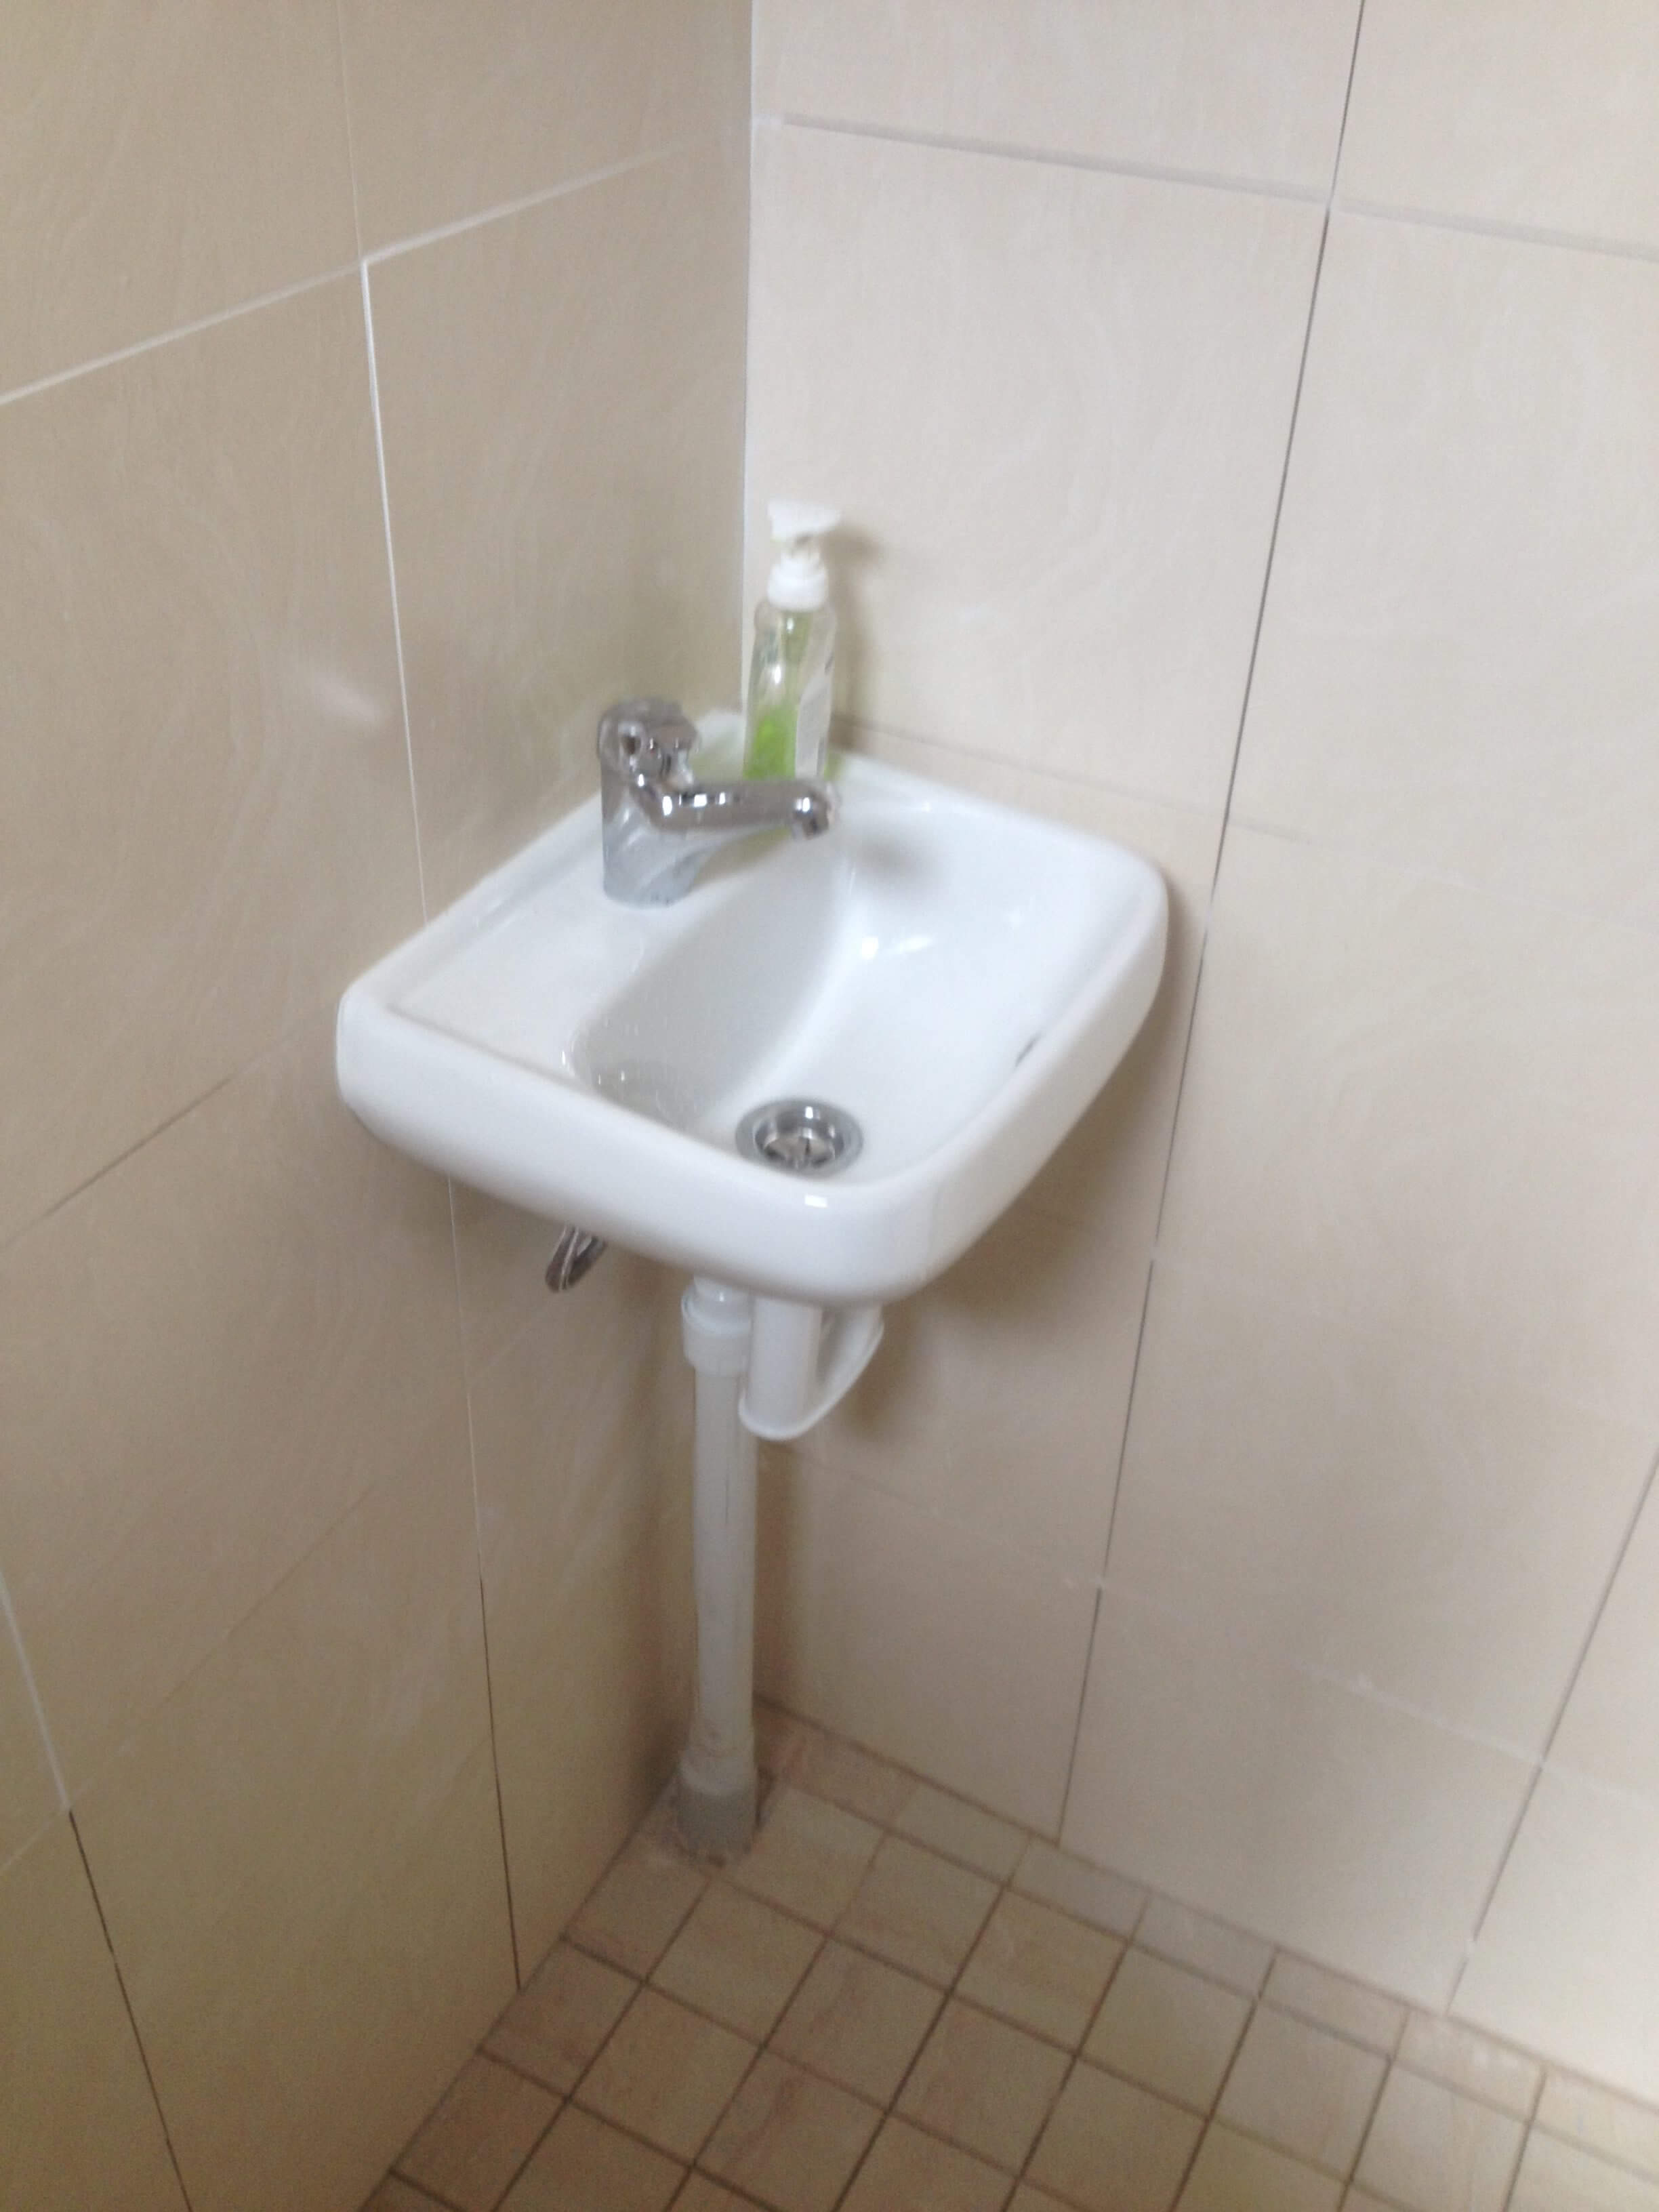 Everyday Plumbers Plumbing Fittings and Sanitary Fixtures - Bathroom Sink 2454